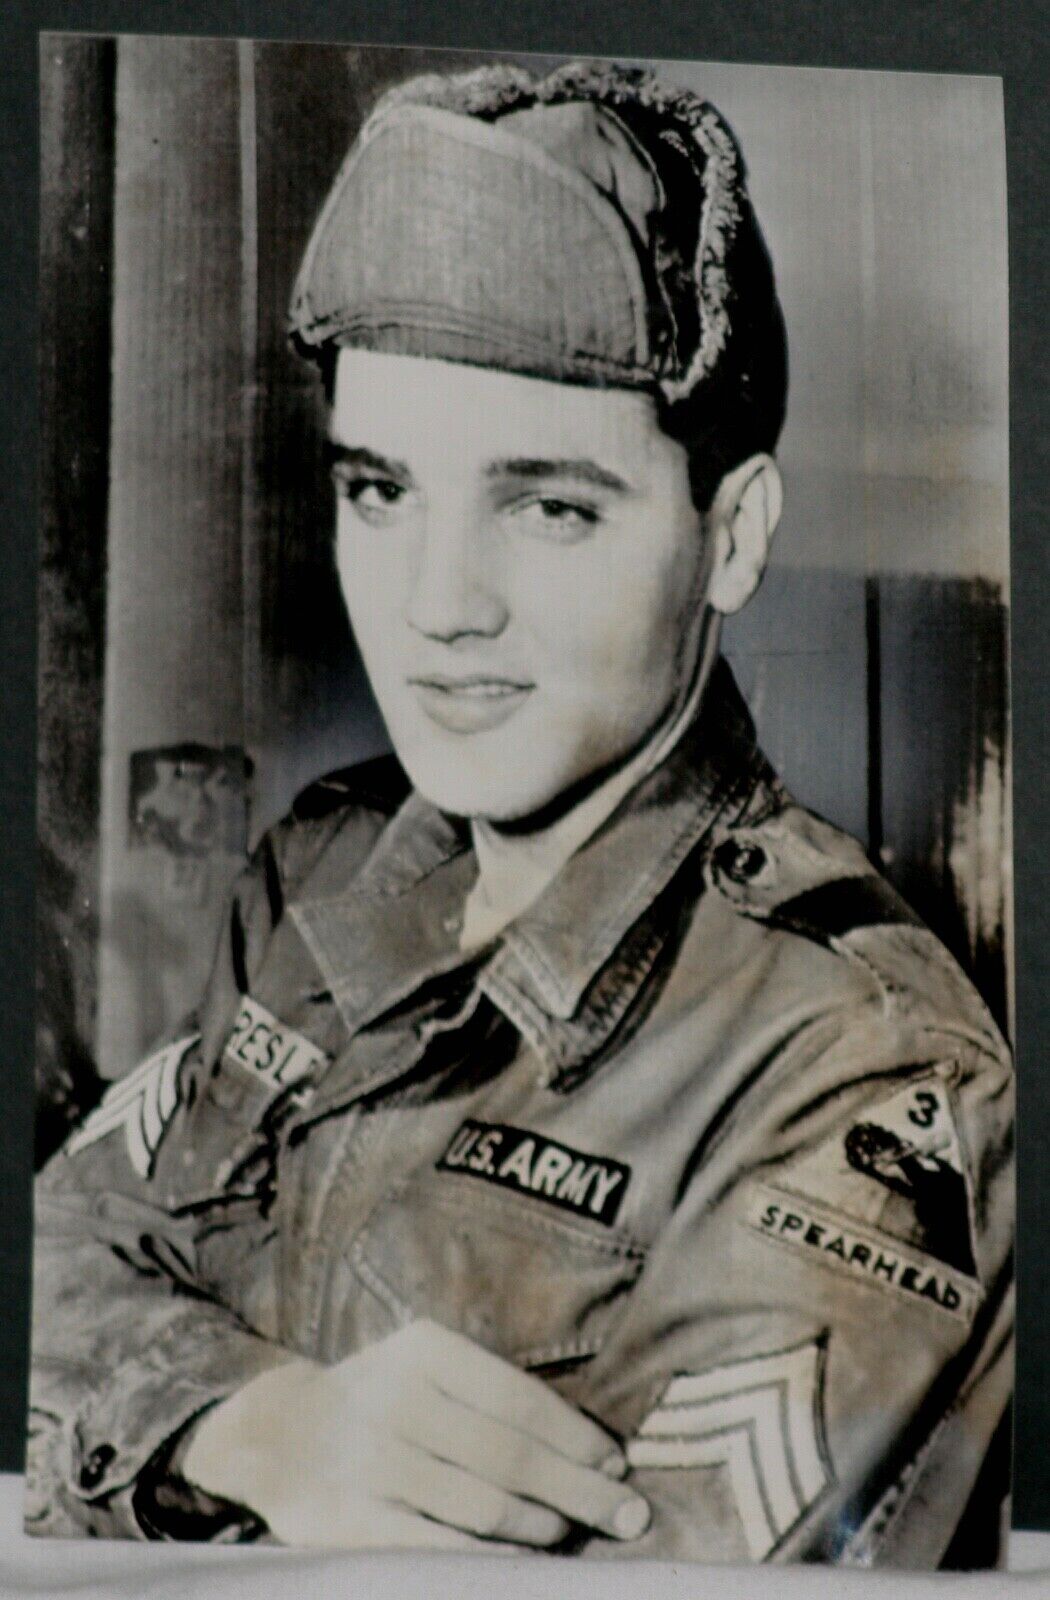 AMAZIING  1959 Elvis Presley, Wire Photo in U.S. Army Uniform, 5